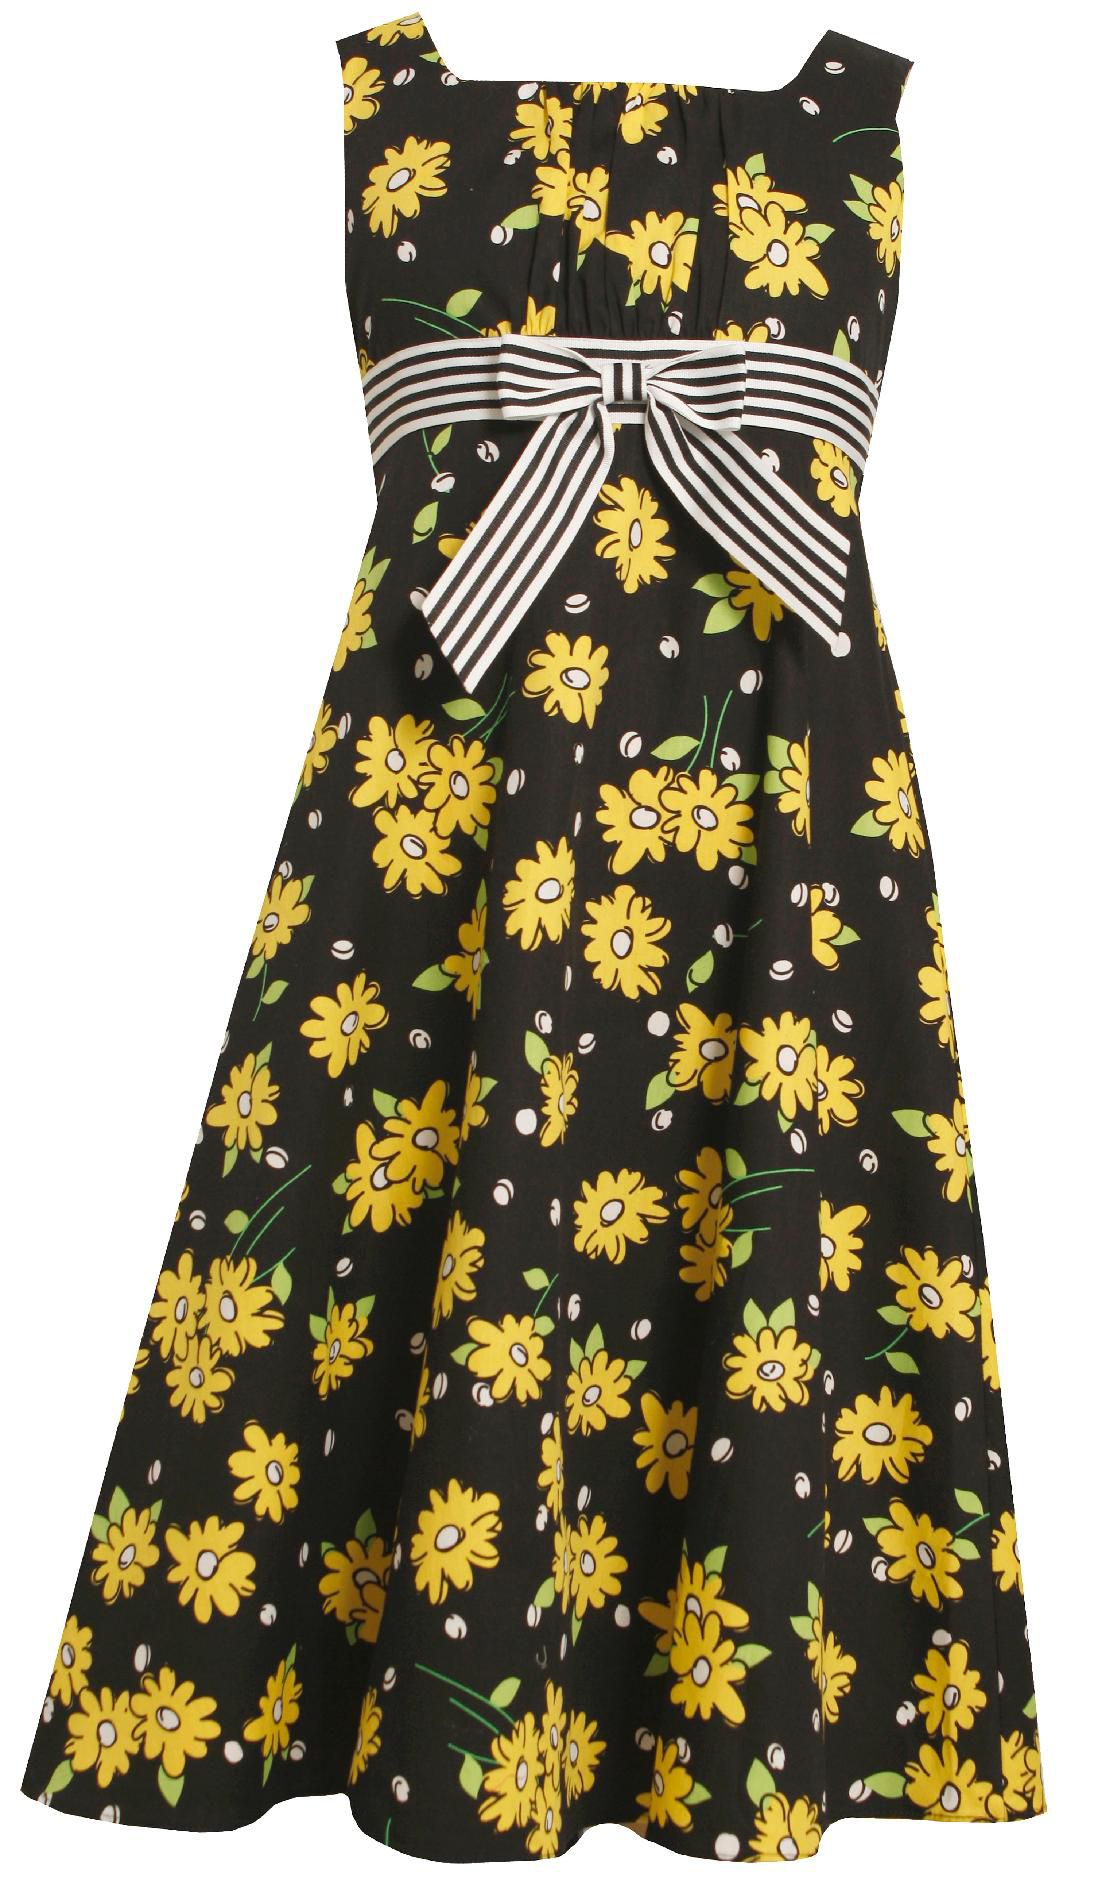 Ashley Ann Girl's Dress Emma Daisy Black/Yellow